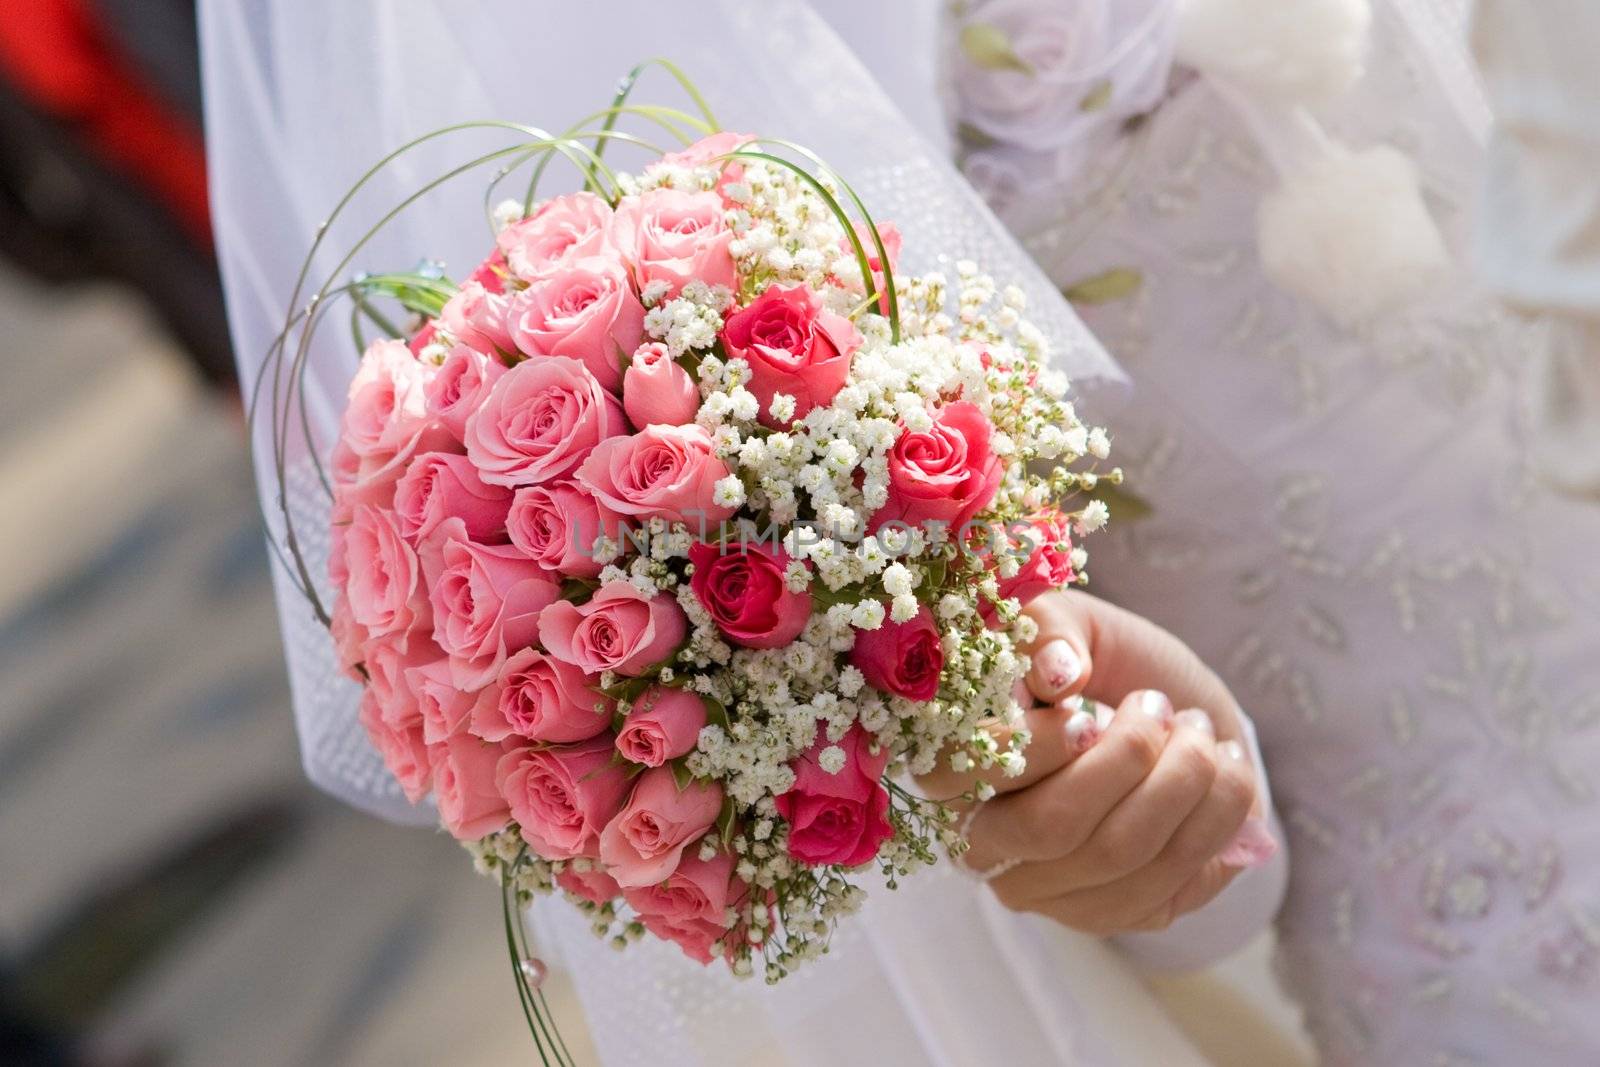 wedding dress and flower bouquet by vsurkov